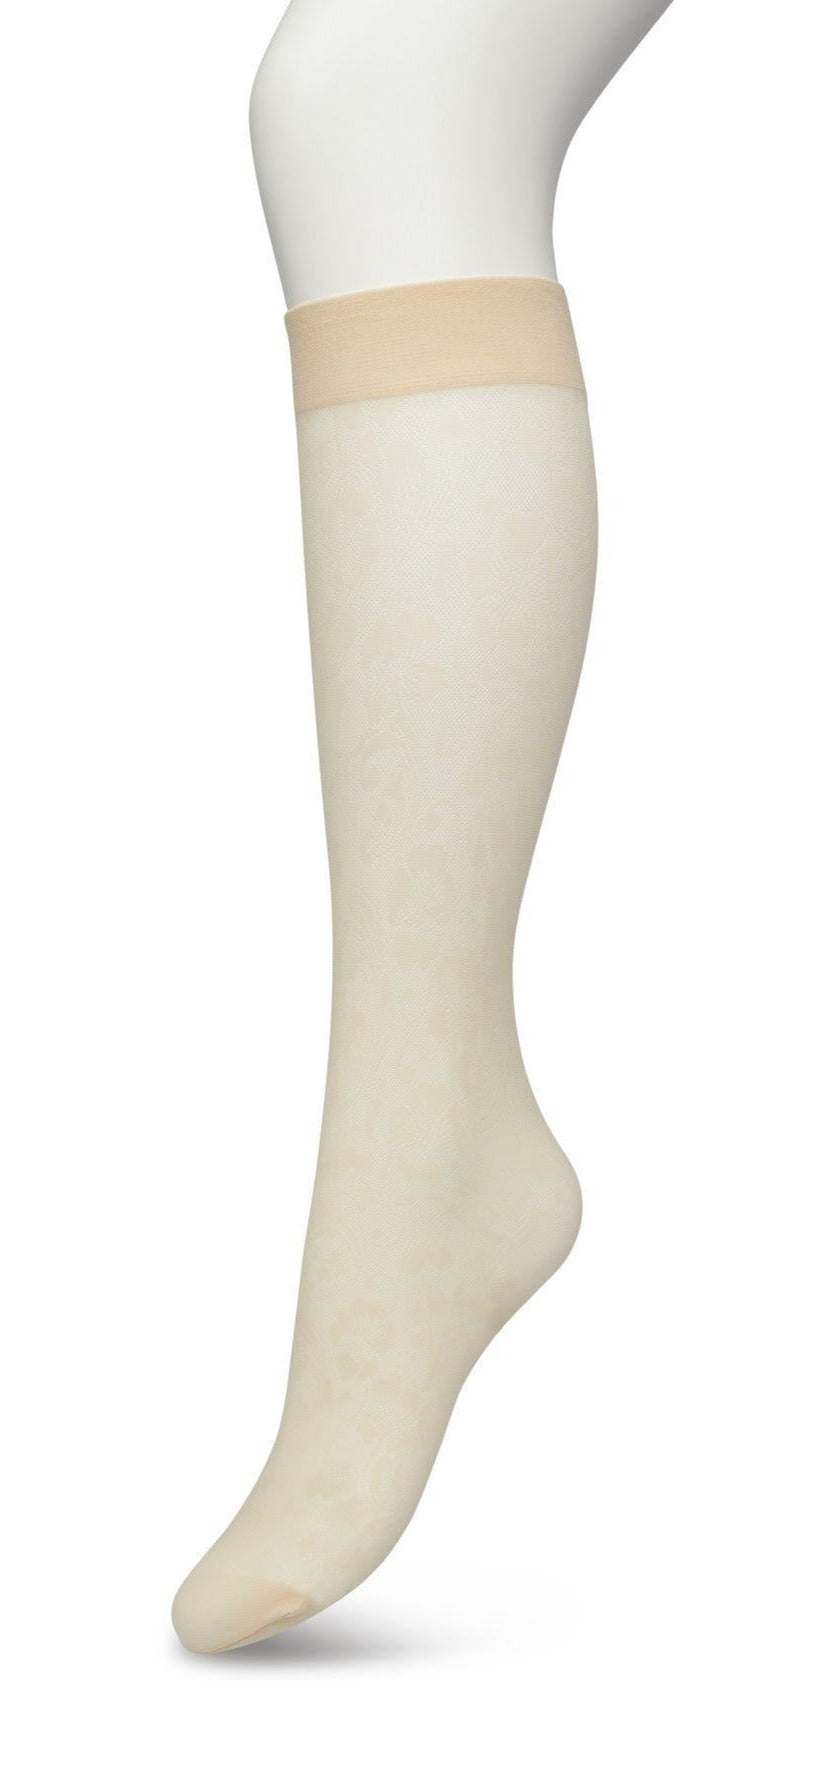 Bonnie Doon BP221803 Fancy Flowers Knee-Highs - Semi-sheer floral lace style patterned knee-high socks in cream ivory.